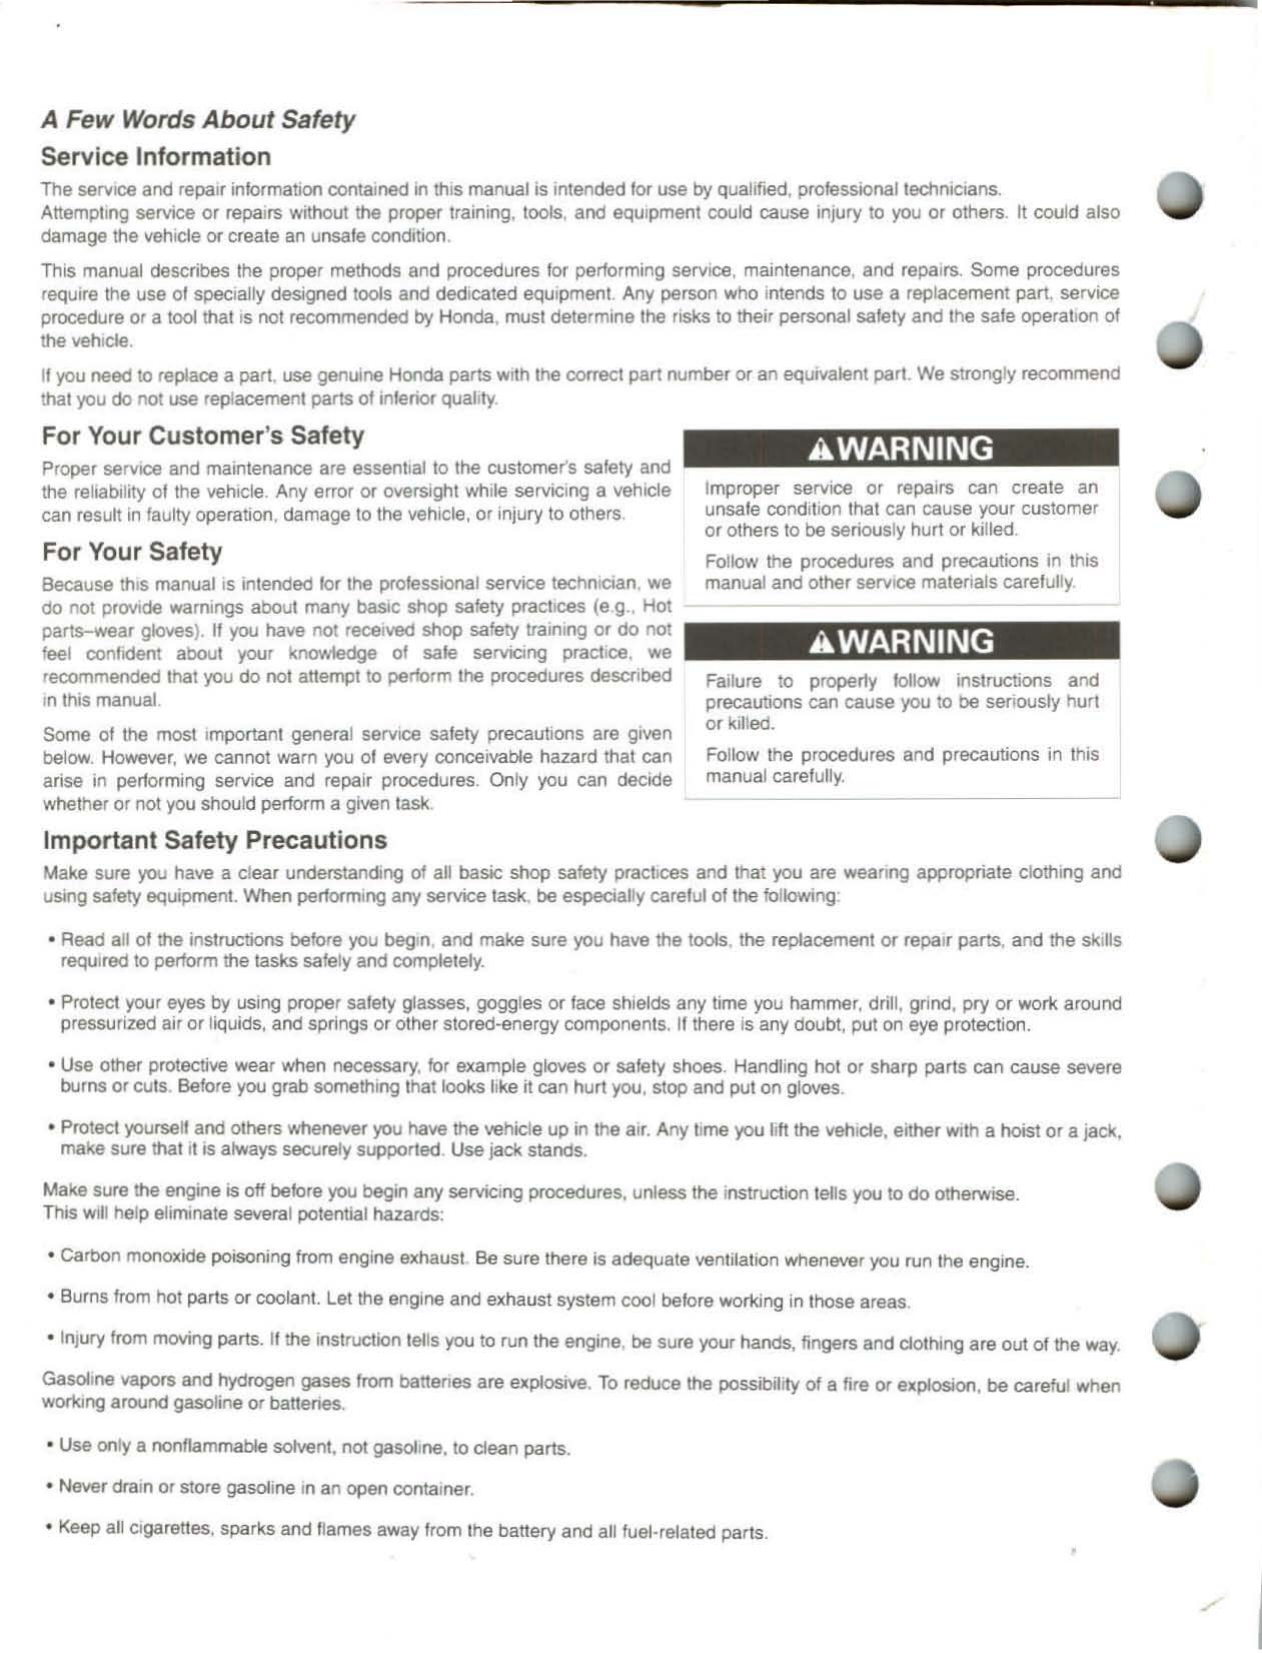 2005-2012 Honda Foreman Rubicon 500 repair and service manual Preview image 2